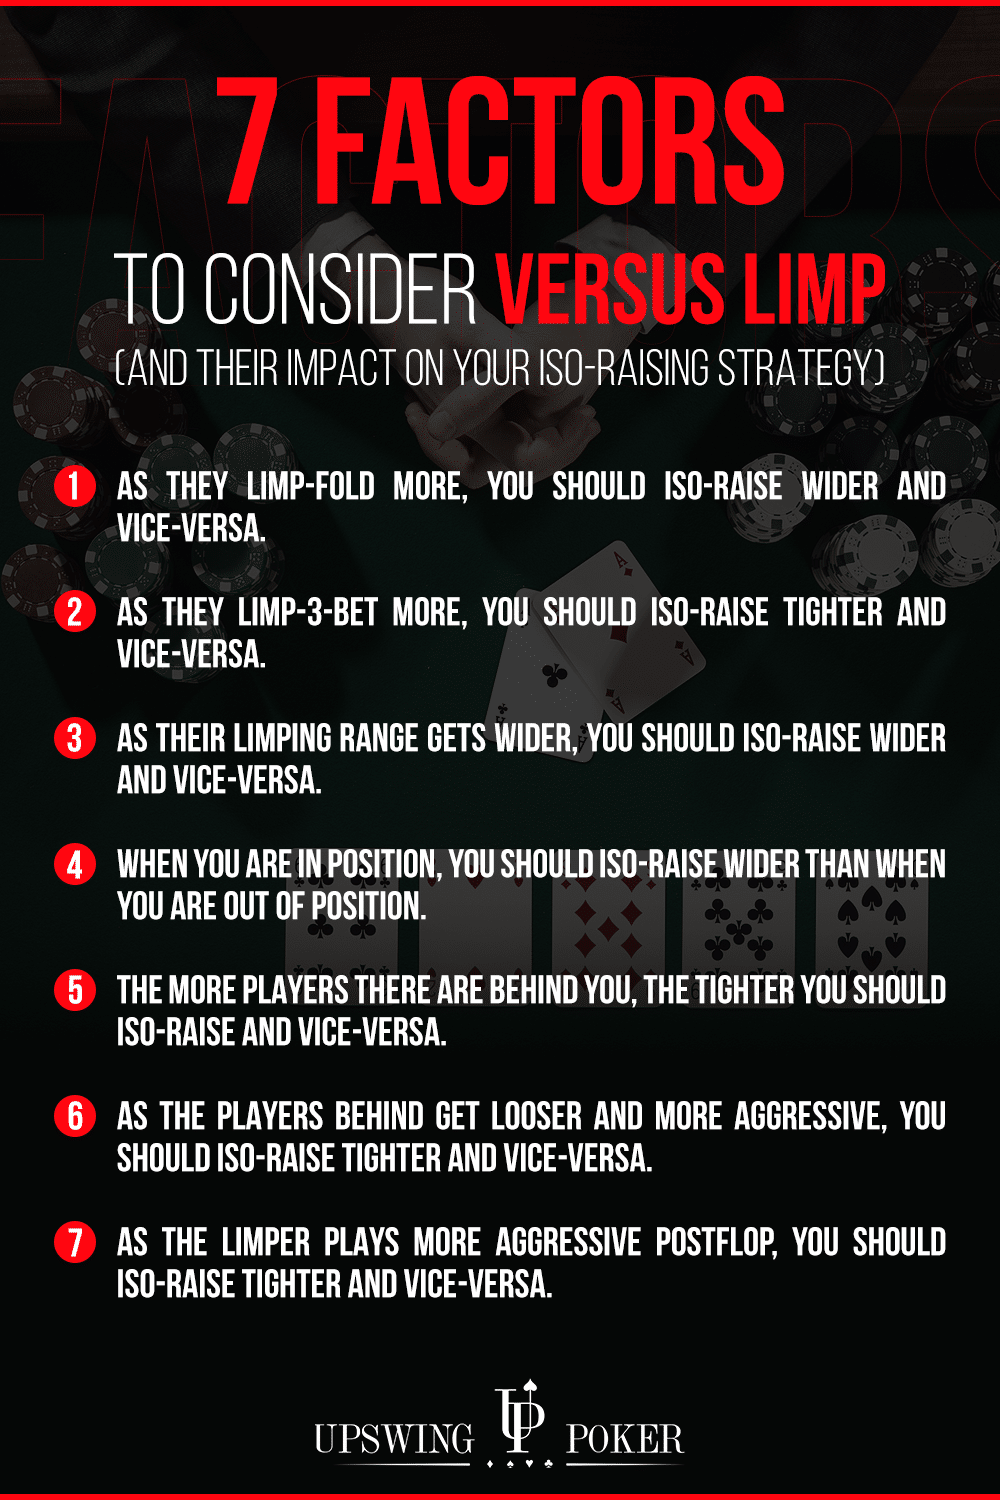 versus limp at passive tables